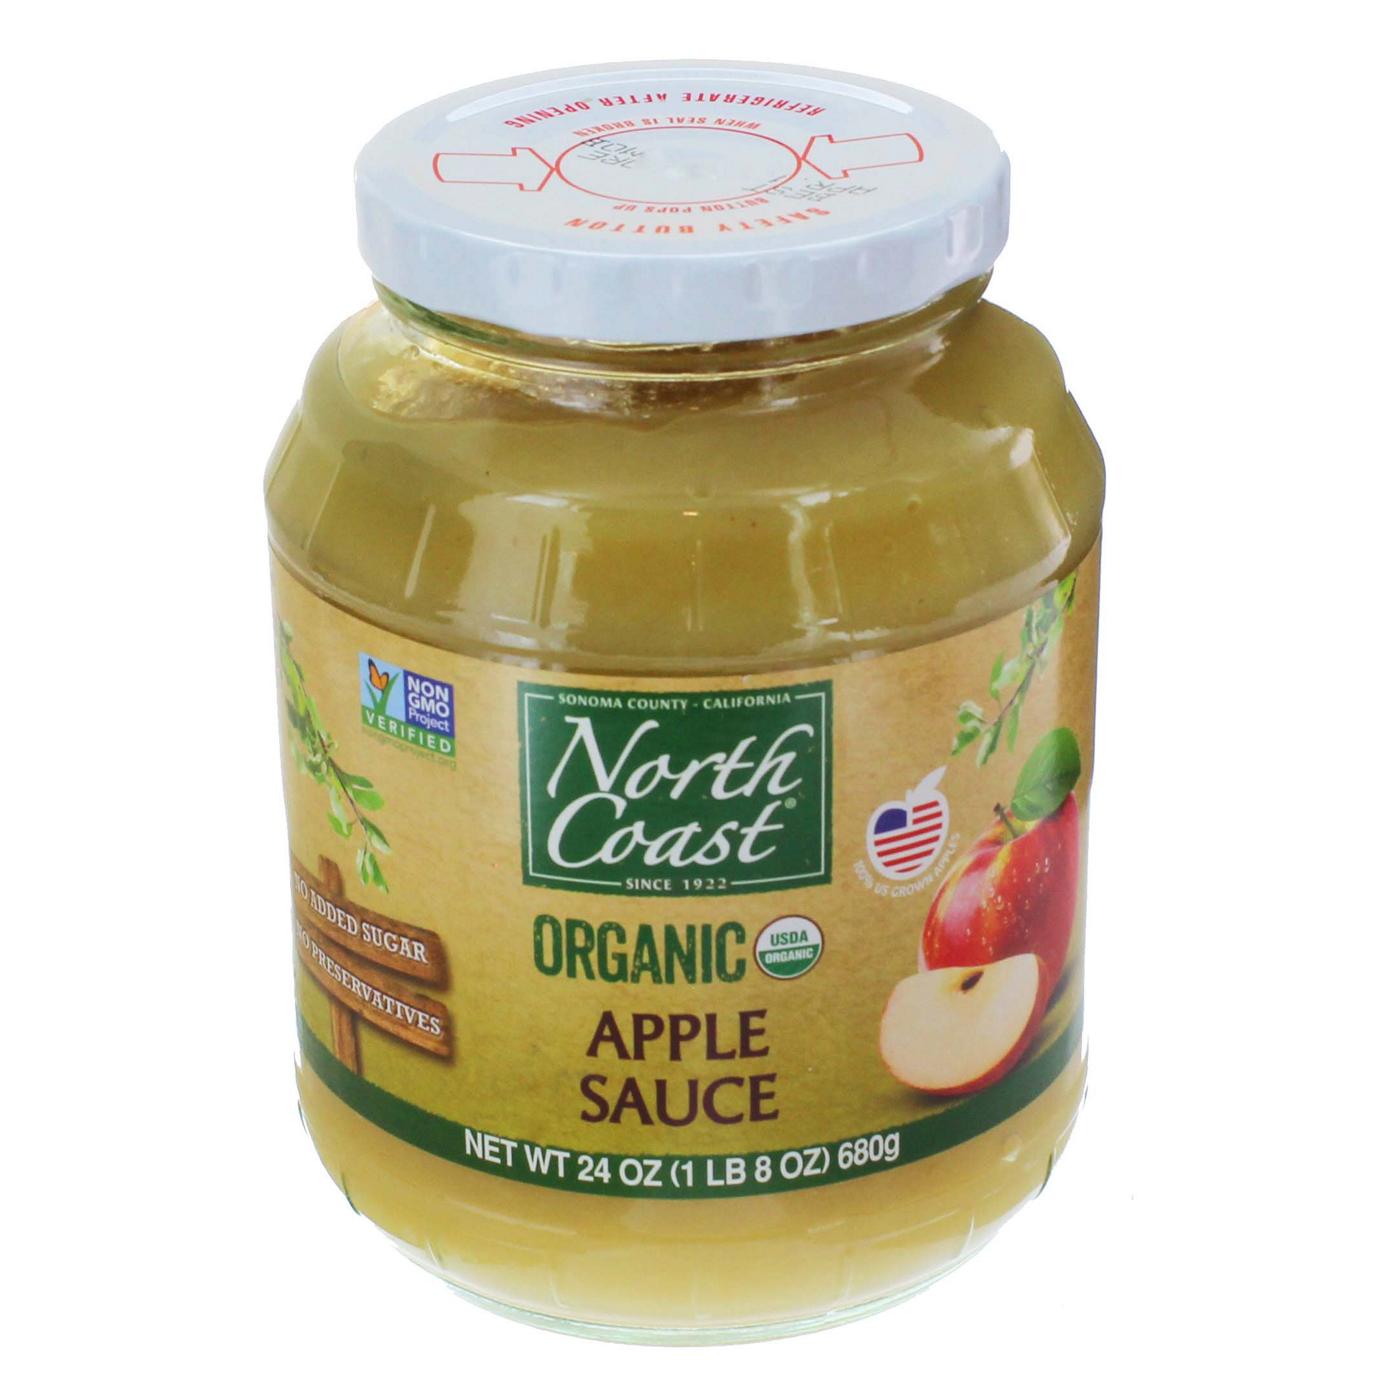 North Coast Organic Apple Sauce; image 1 of 2